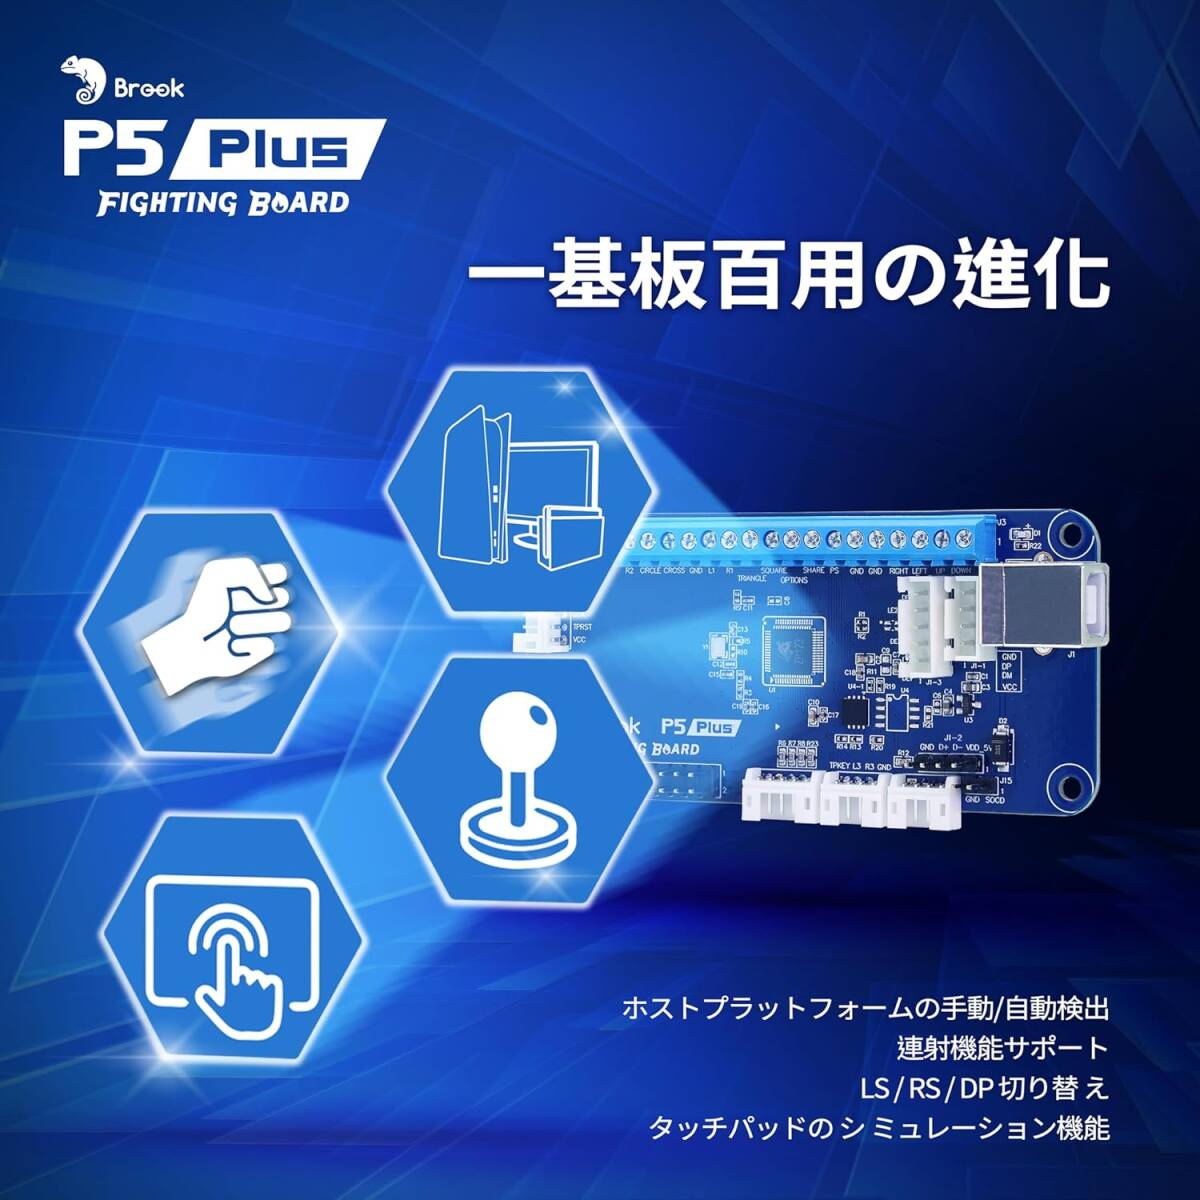 Brook P5 Plus Fighting Board P5プラス ファイティングボード アーケードコントローラー 変換基板 Game PS4 Switch PC タッチパッド_画像3